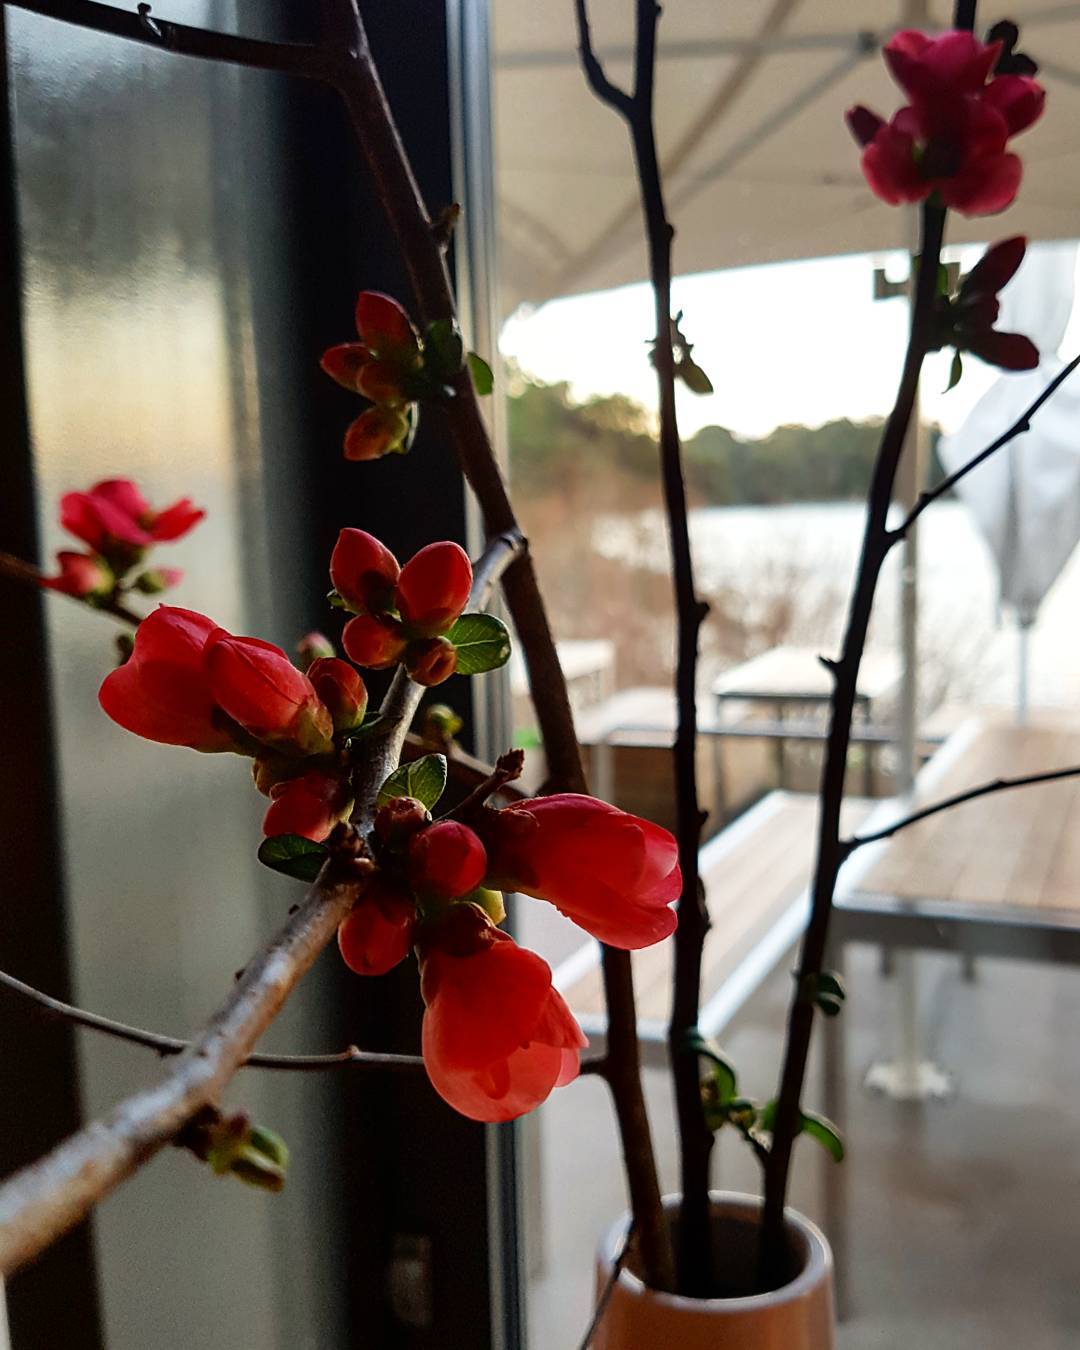 Some beautiful early blossoms from @lisakingstonflowers
?: @_tomsandy #blossom #early # flowers #peppermintbay #woodbridge #tasmania #tasmanianflorist